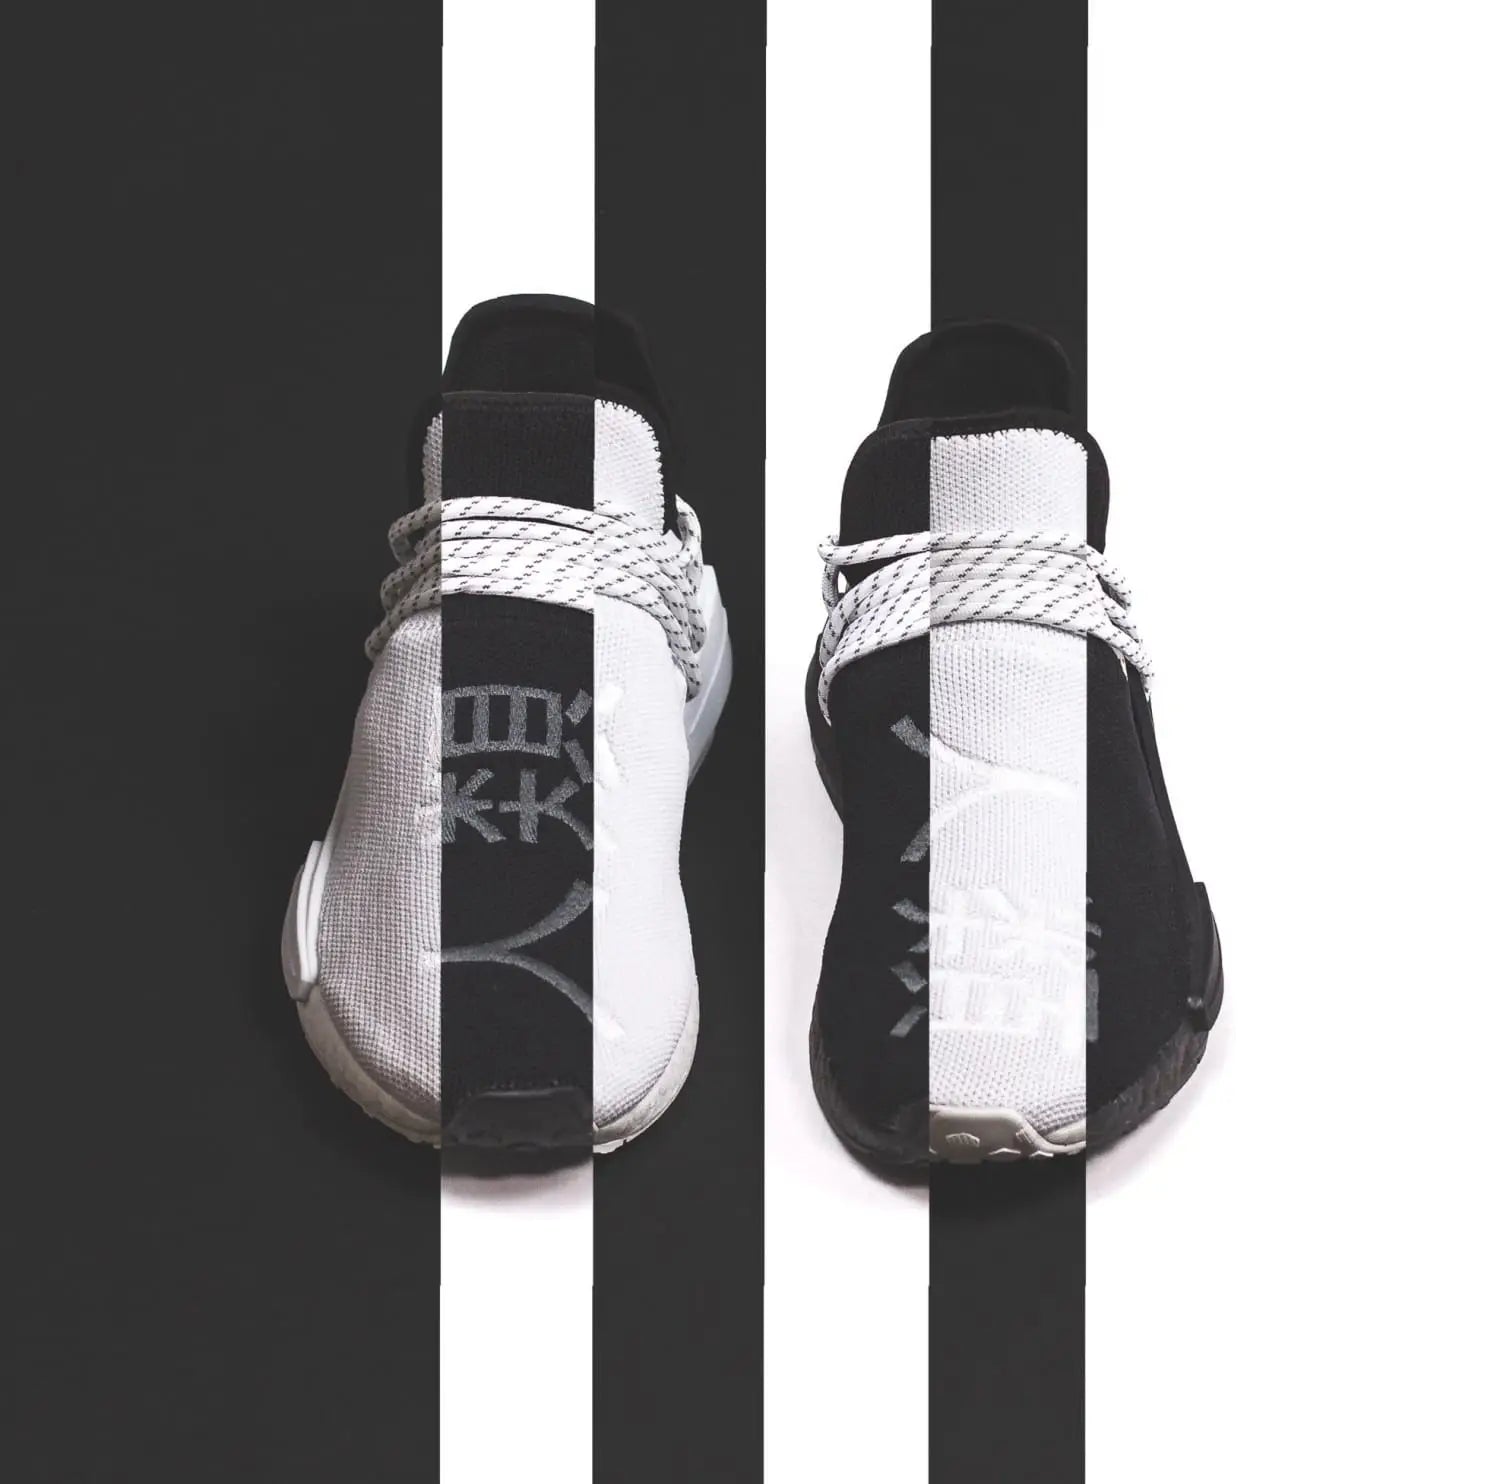 Adidas x Pharrell Williams HU NMD Cloud White/Core Black - GY0092